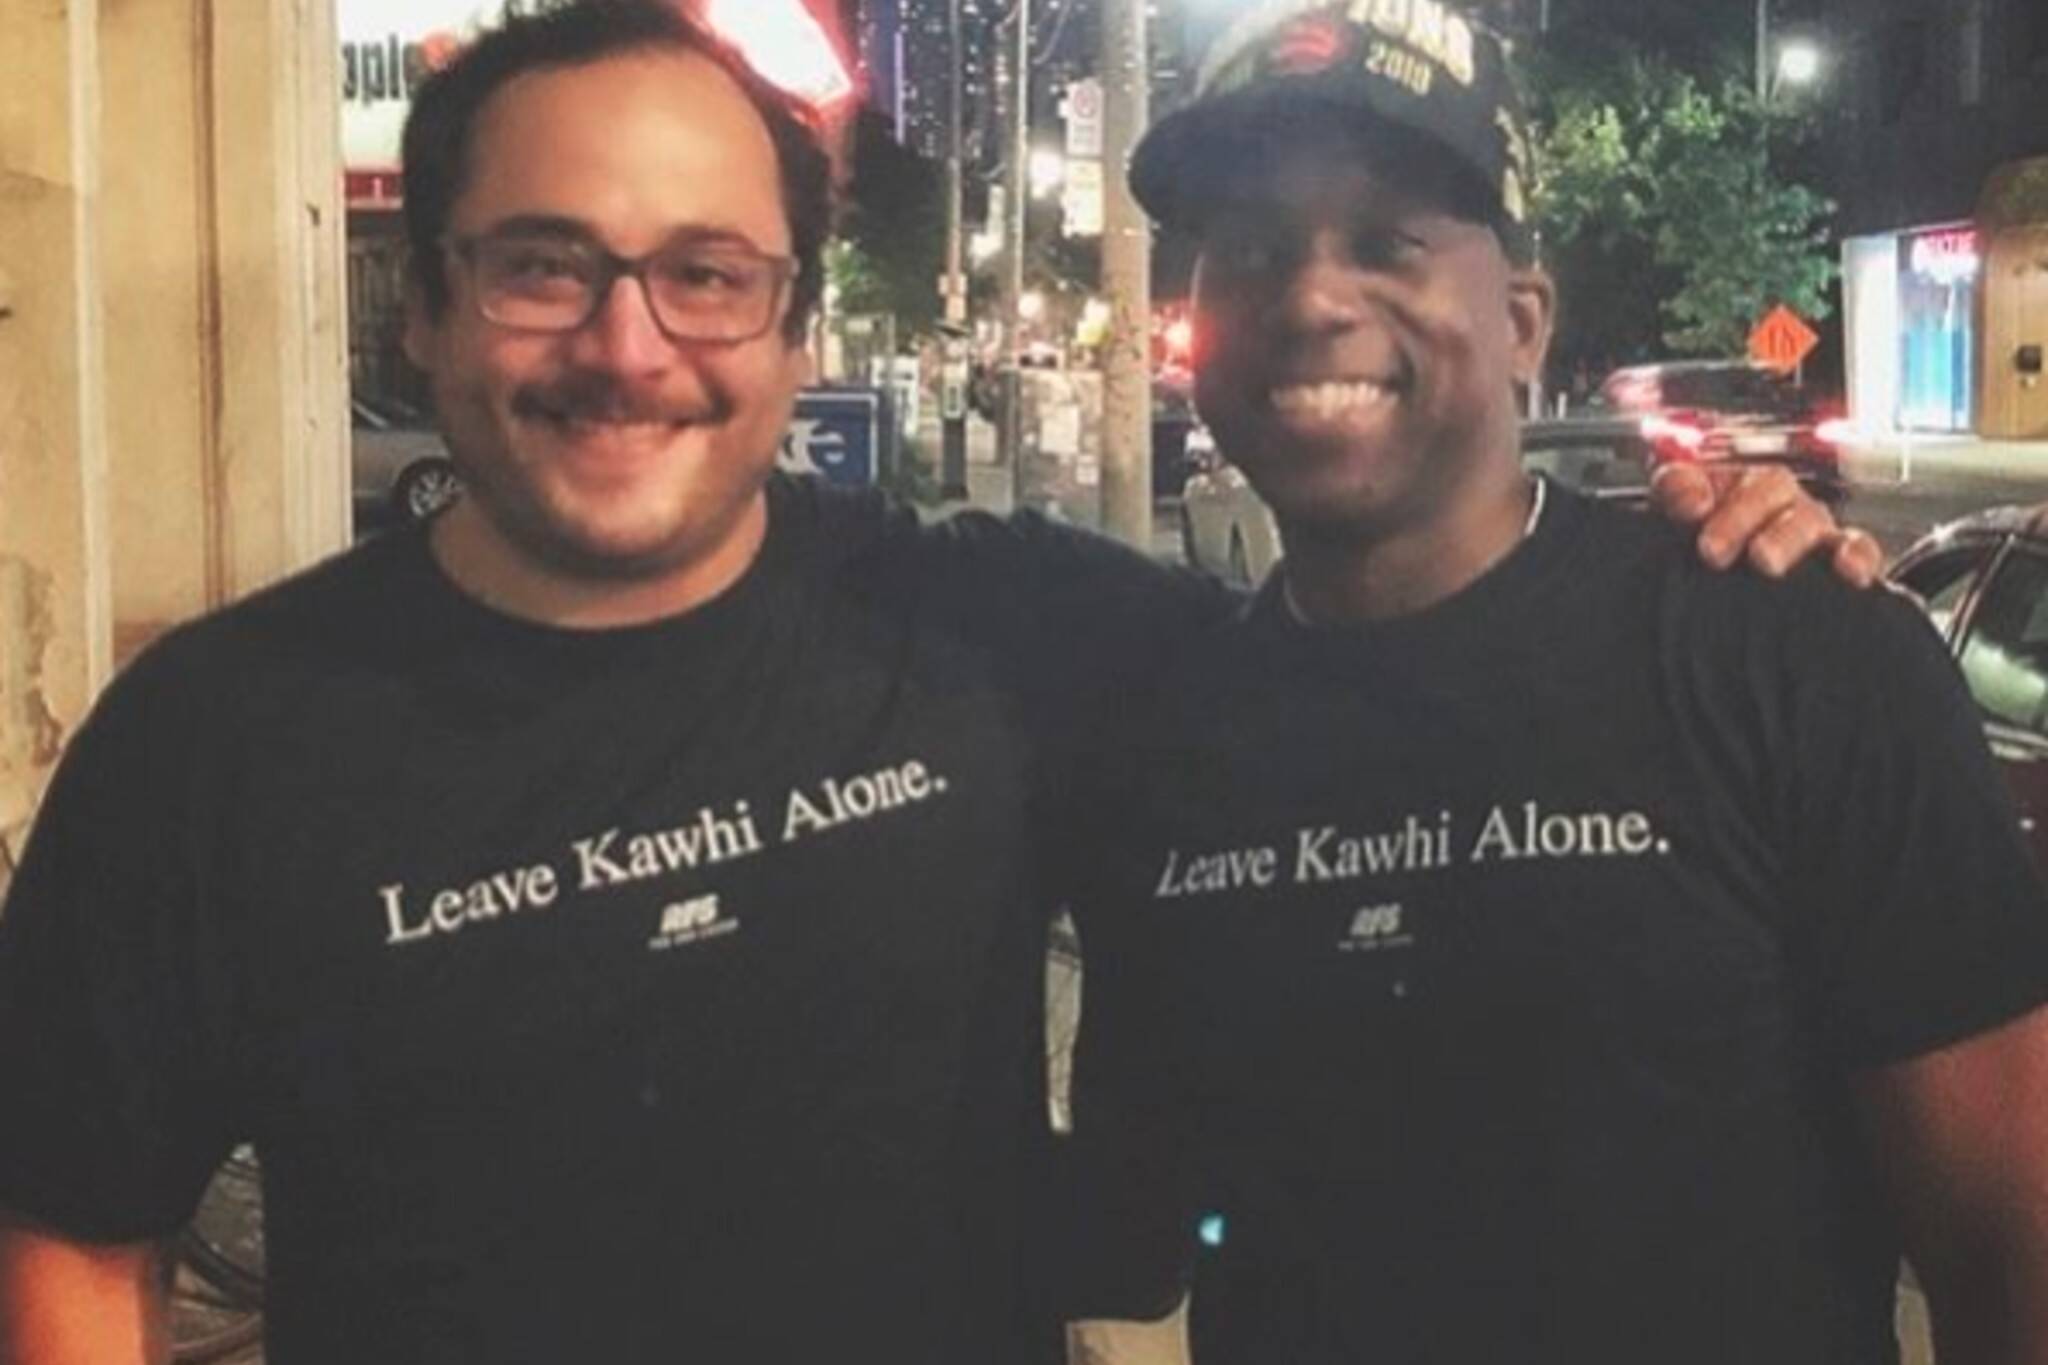 Two guys in Toronto made hilarious knock-off New Balance Kawhi Leonard  shirts